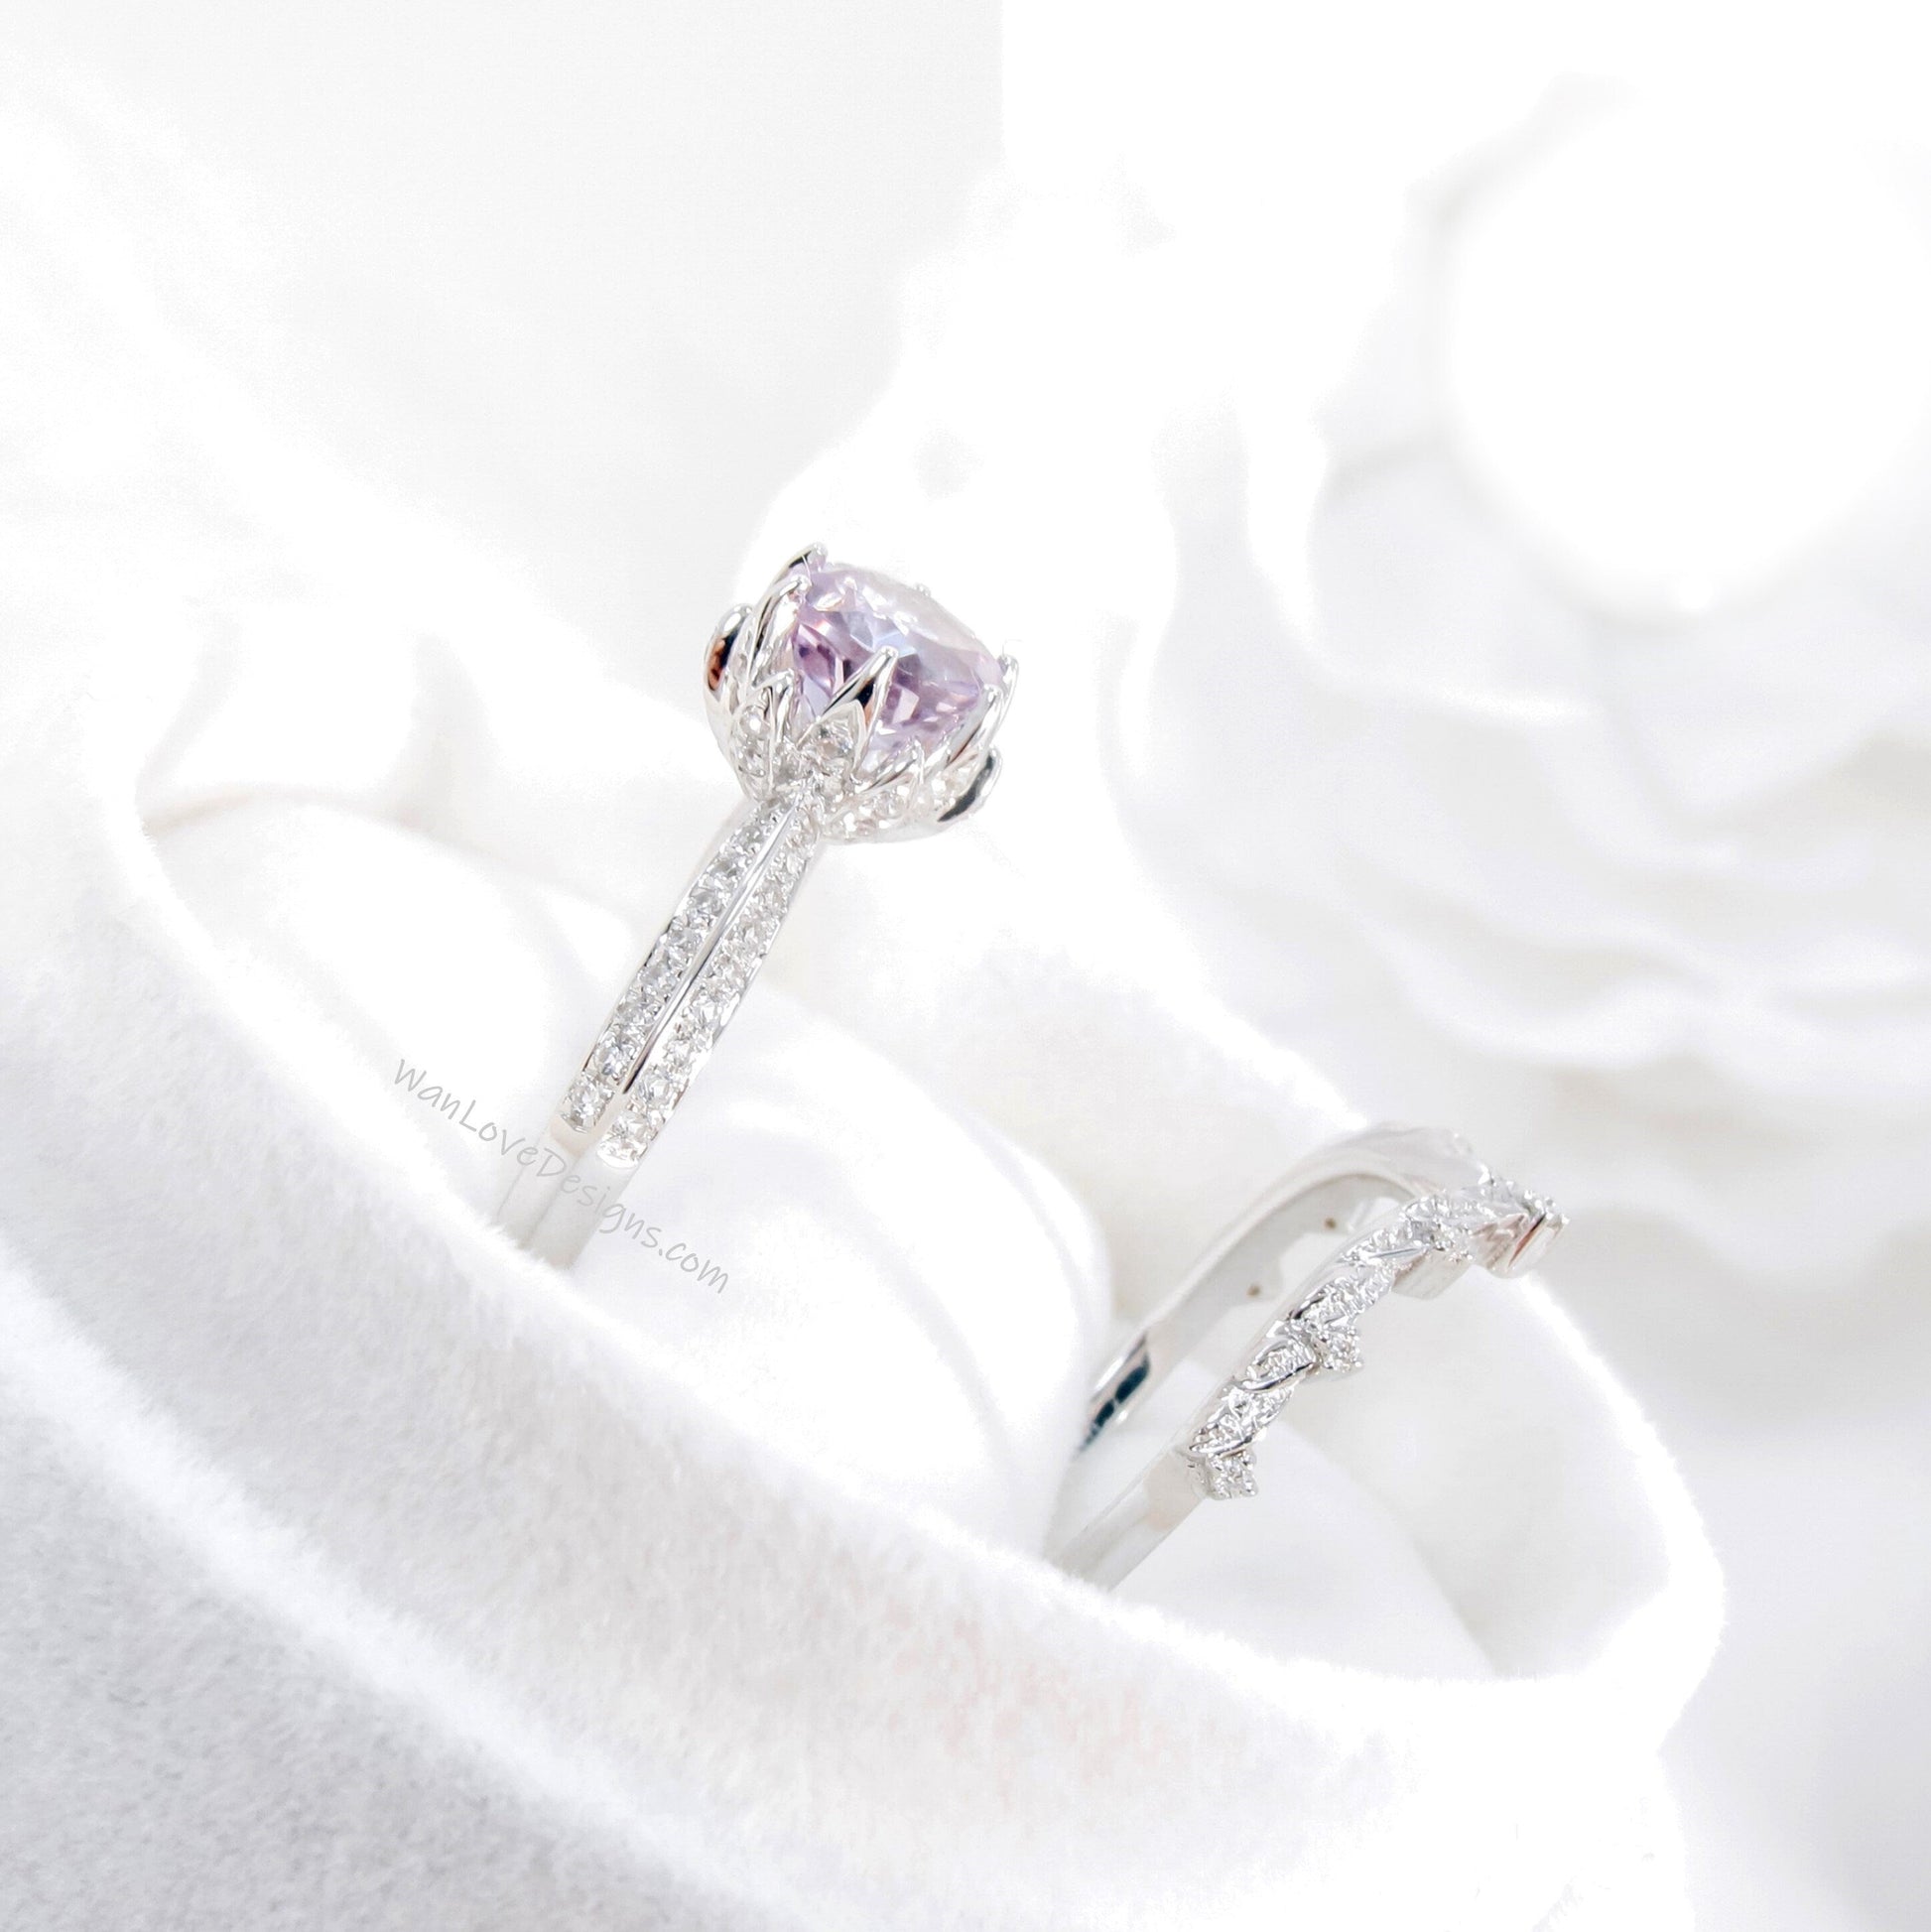 1.65ct Blue Sapphire diamond Lotus ring set - engagement ring wedding band- leaves bridal ring- diamond wedding ring- flower engagement ring Wan Love Designs